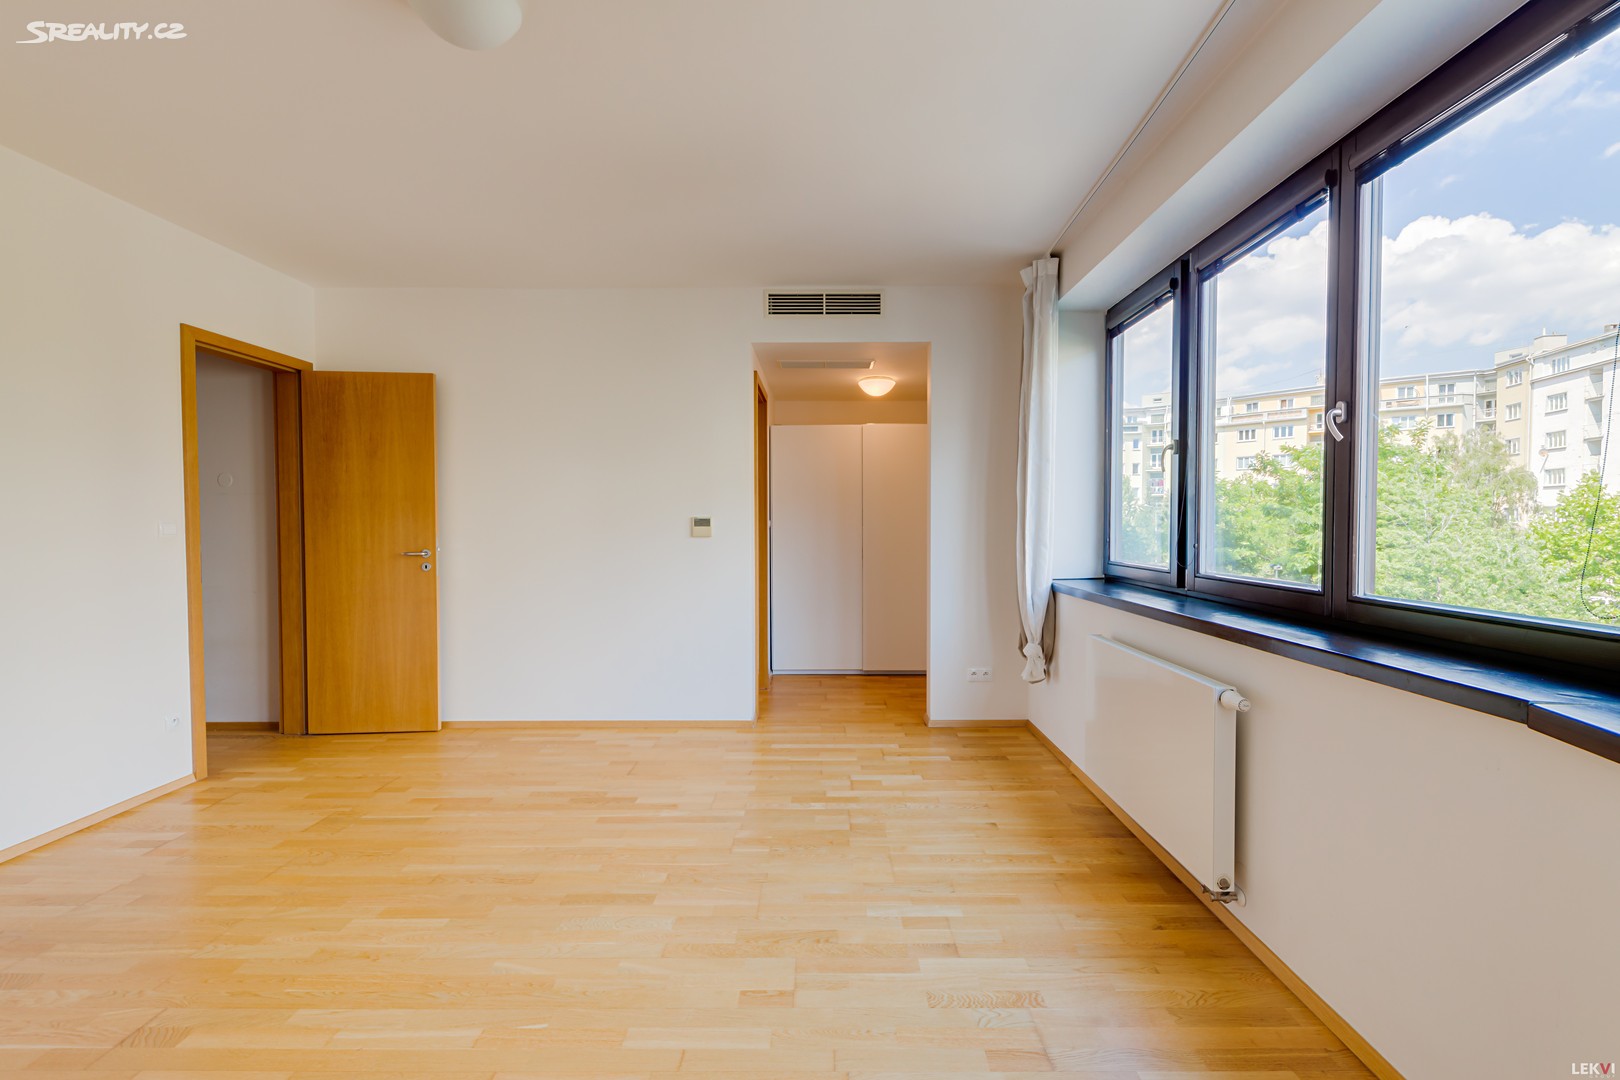 Prodej bytu 4+kk 141 m² (Mezonet), Pitterova, Praha 3 - Žižkov